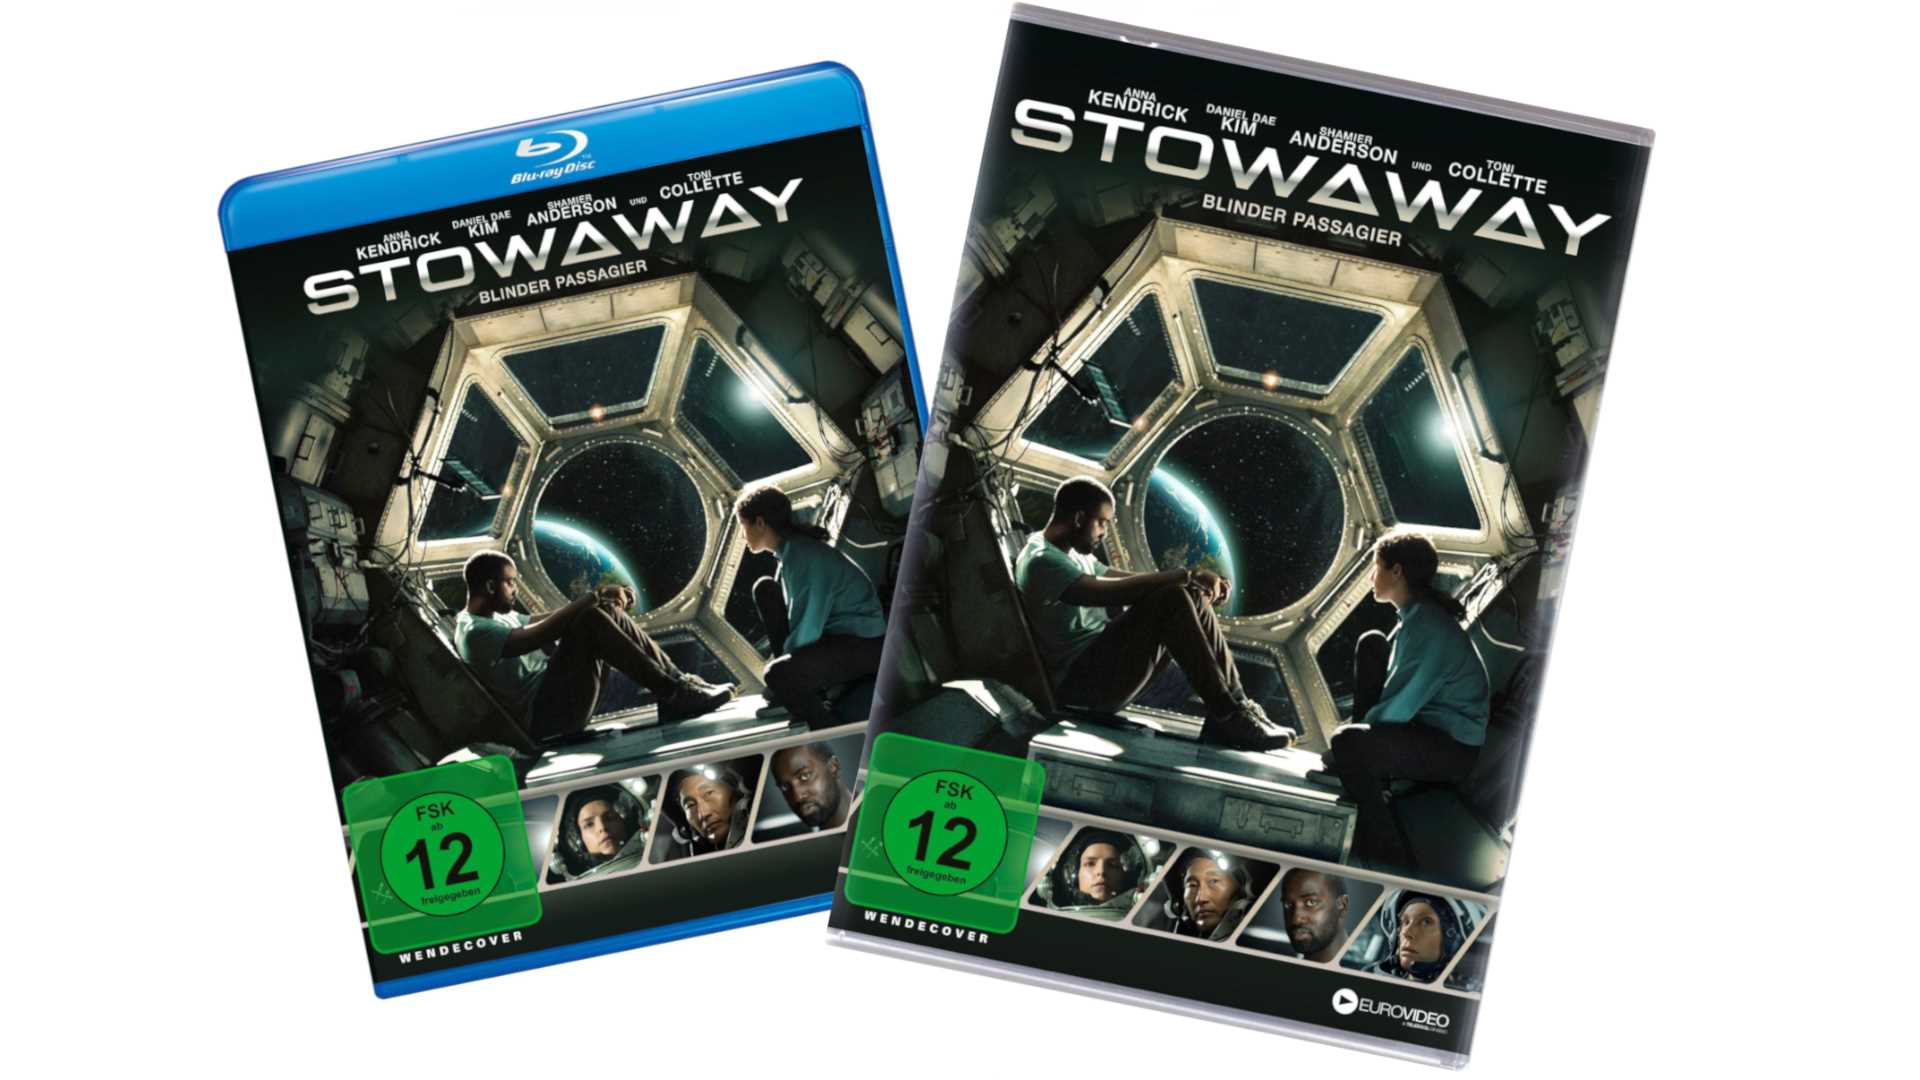 Stowaway - Blinder Passagier - DVD u. BR